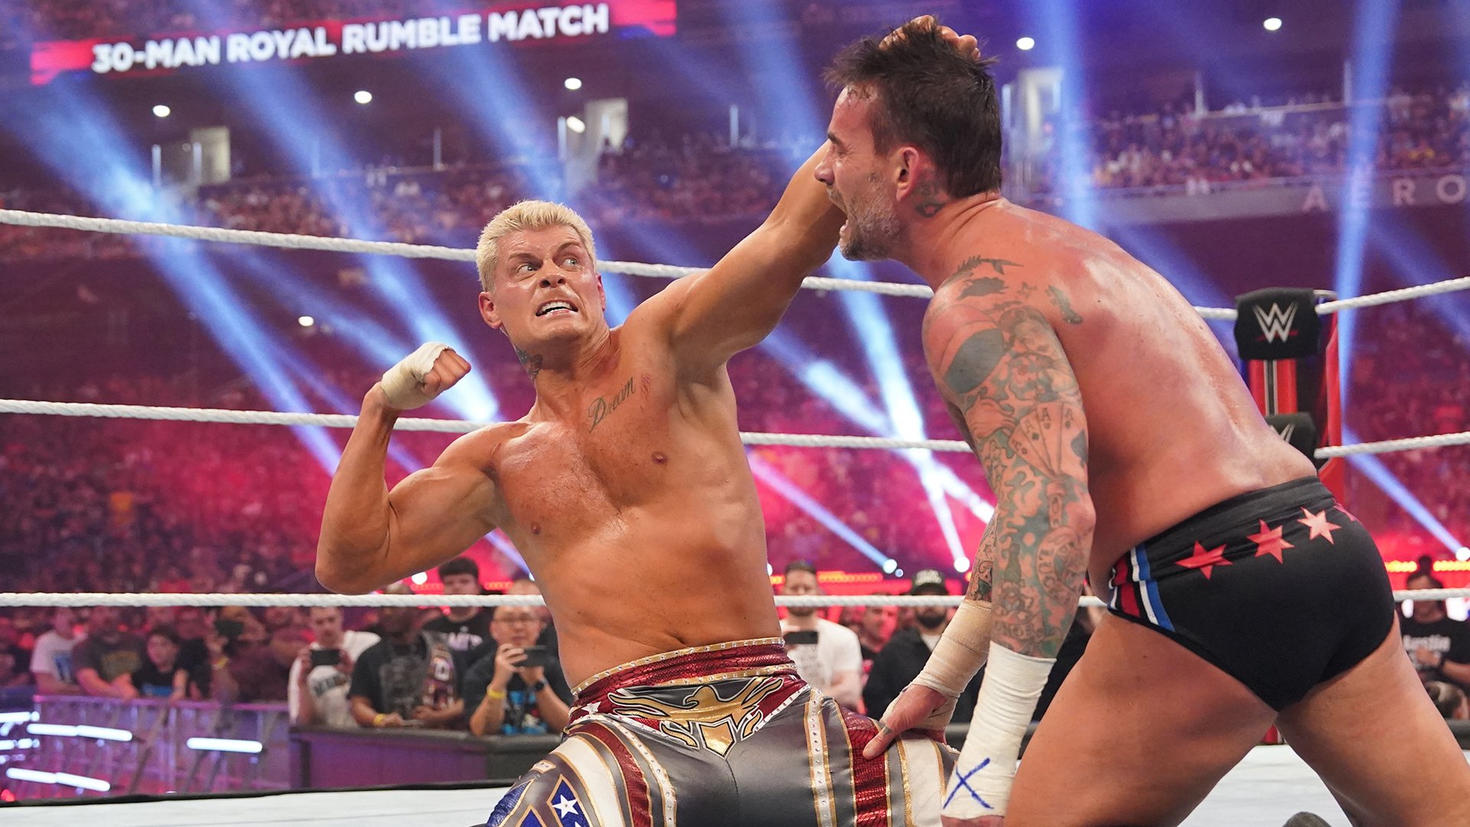 Cody Rhodes vs. CM Punk